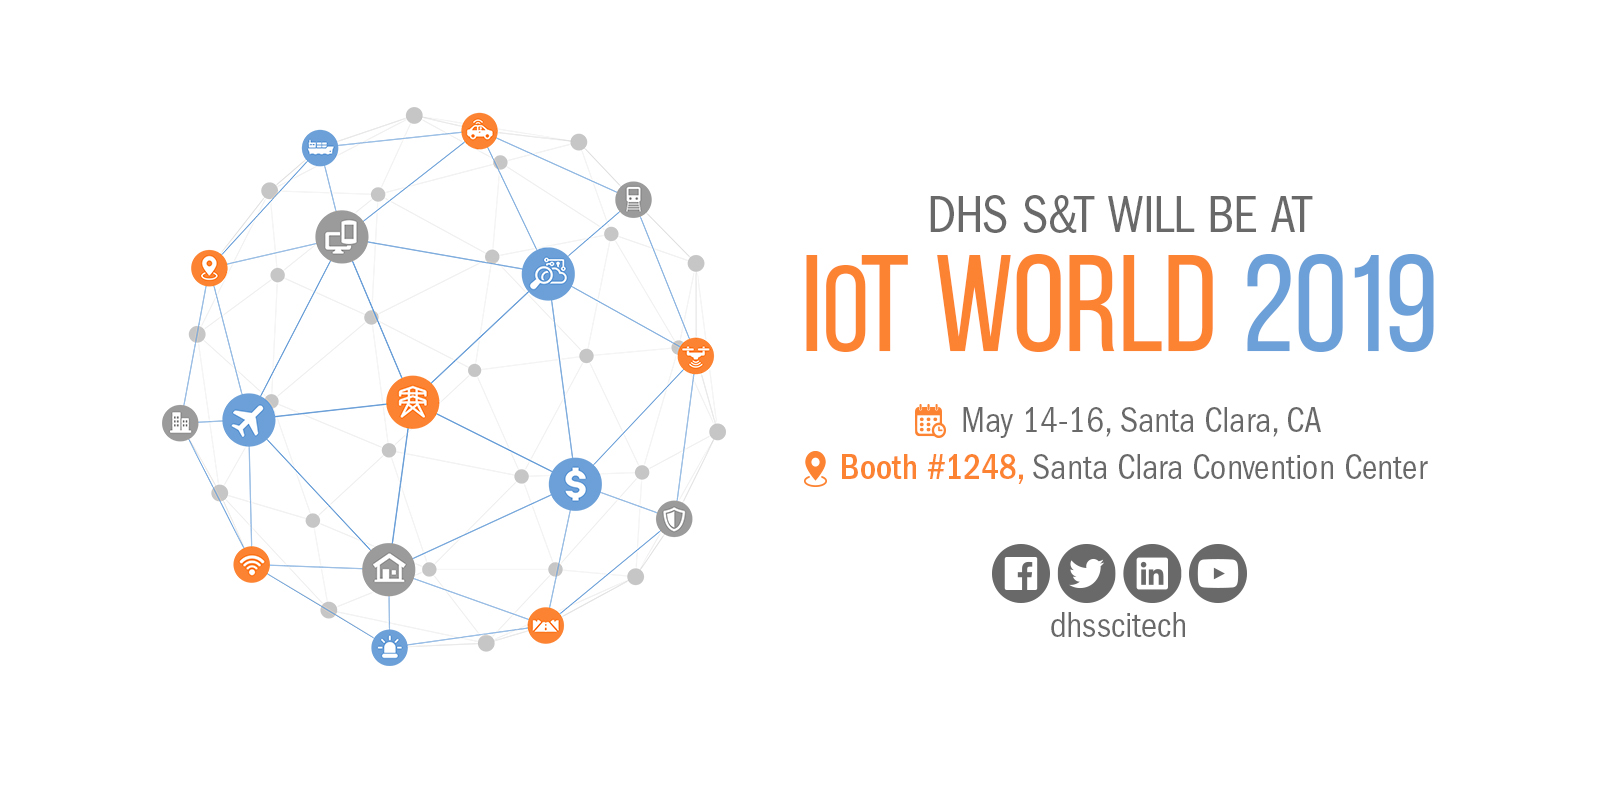 DHS S&T will be at IoT World 2019. May 16-18, Santa Clara, CA. Booth #1248. Santa Clara Convention Center. Social media icons: Facebook, Twitter, LinkedIn, YouTube. dhsscitech.